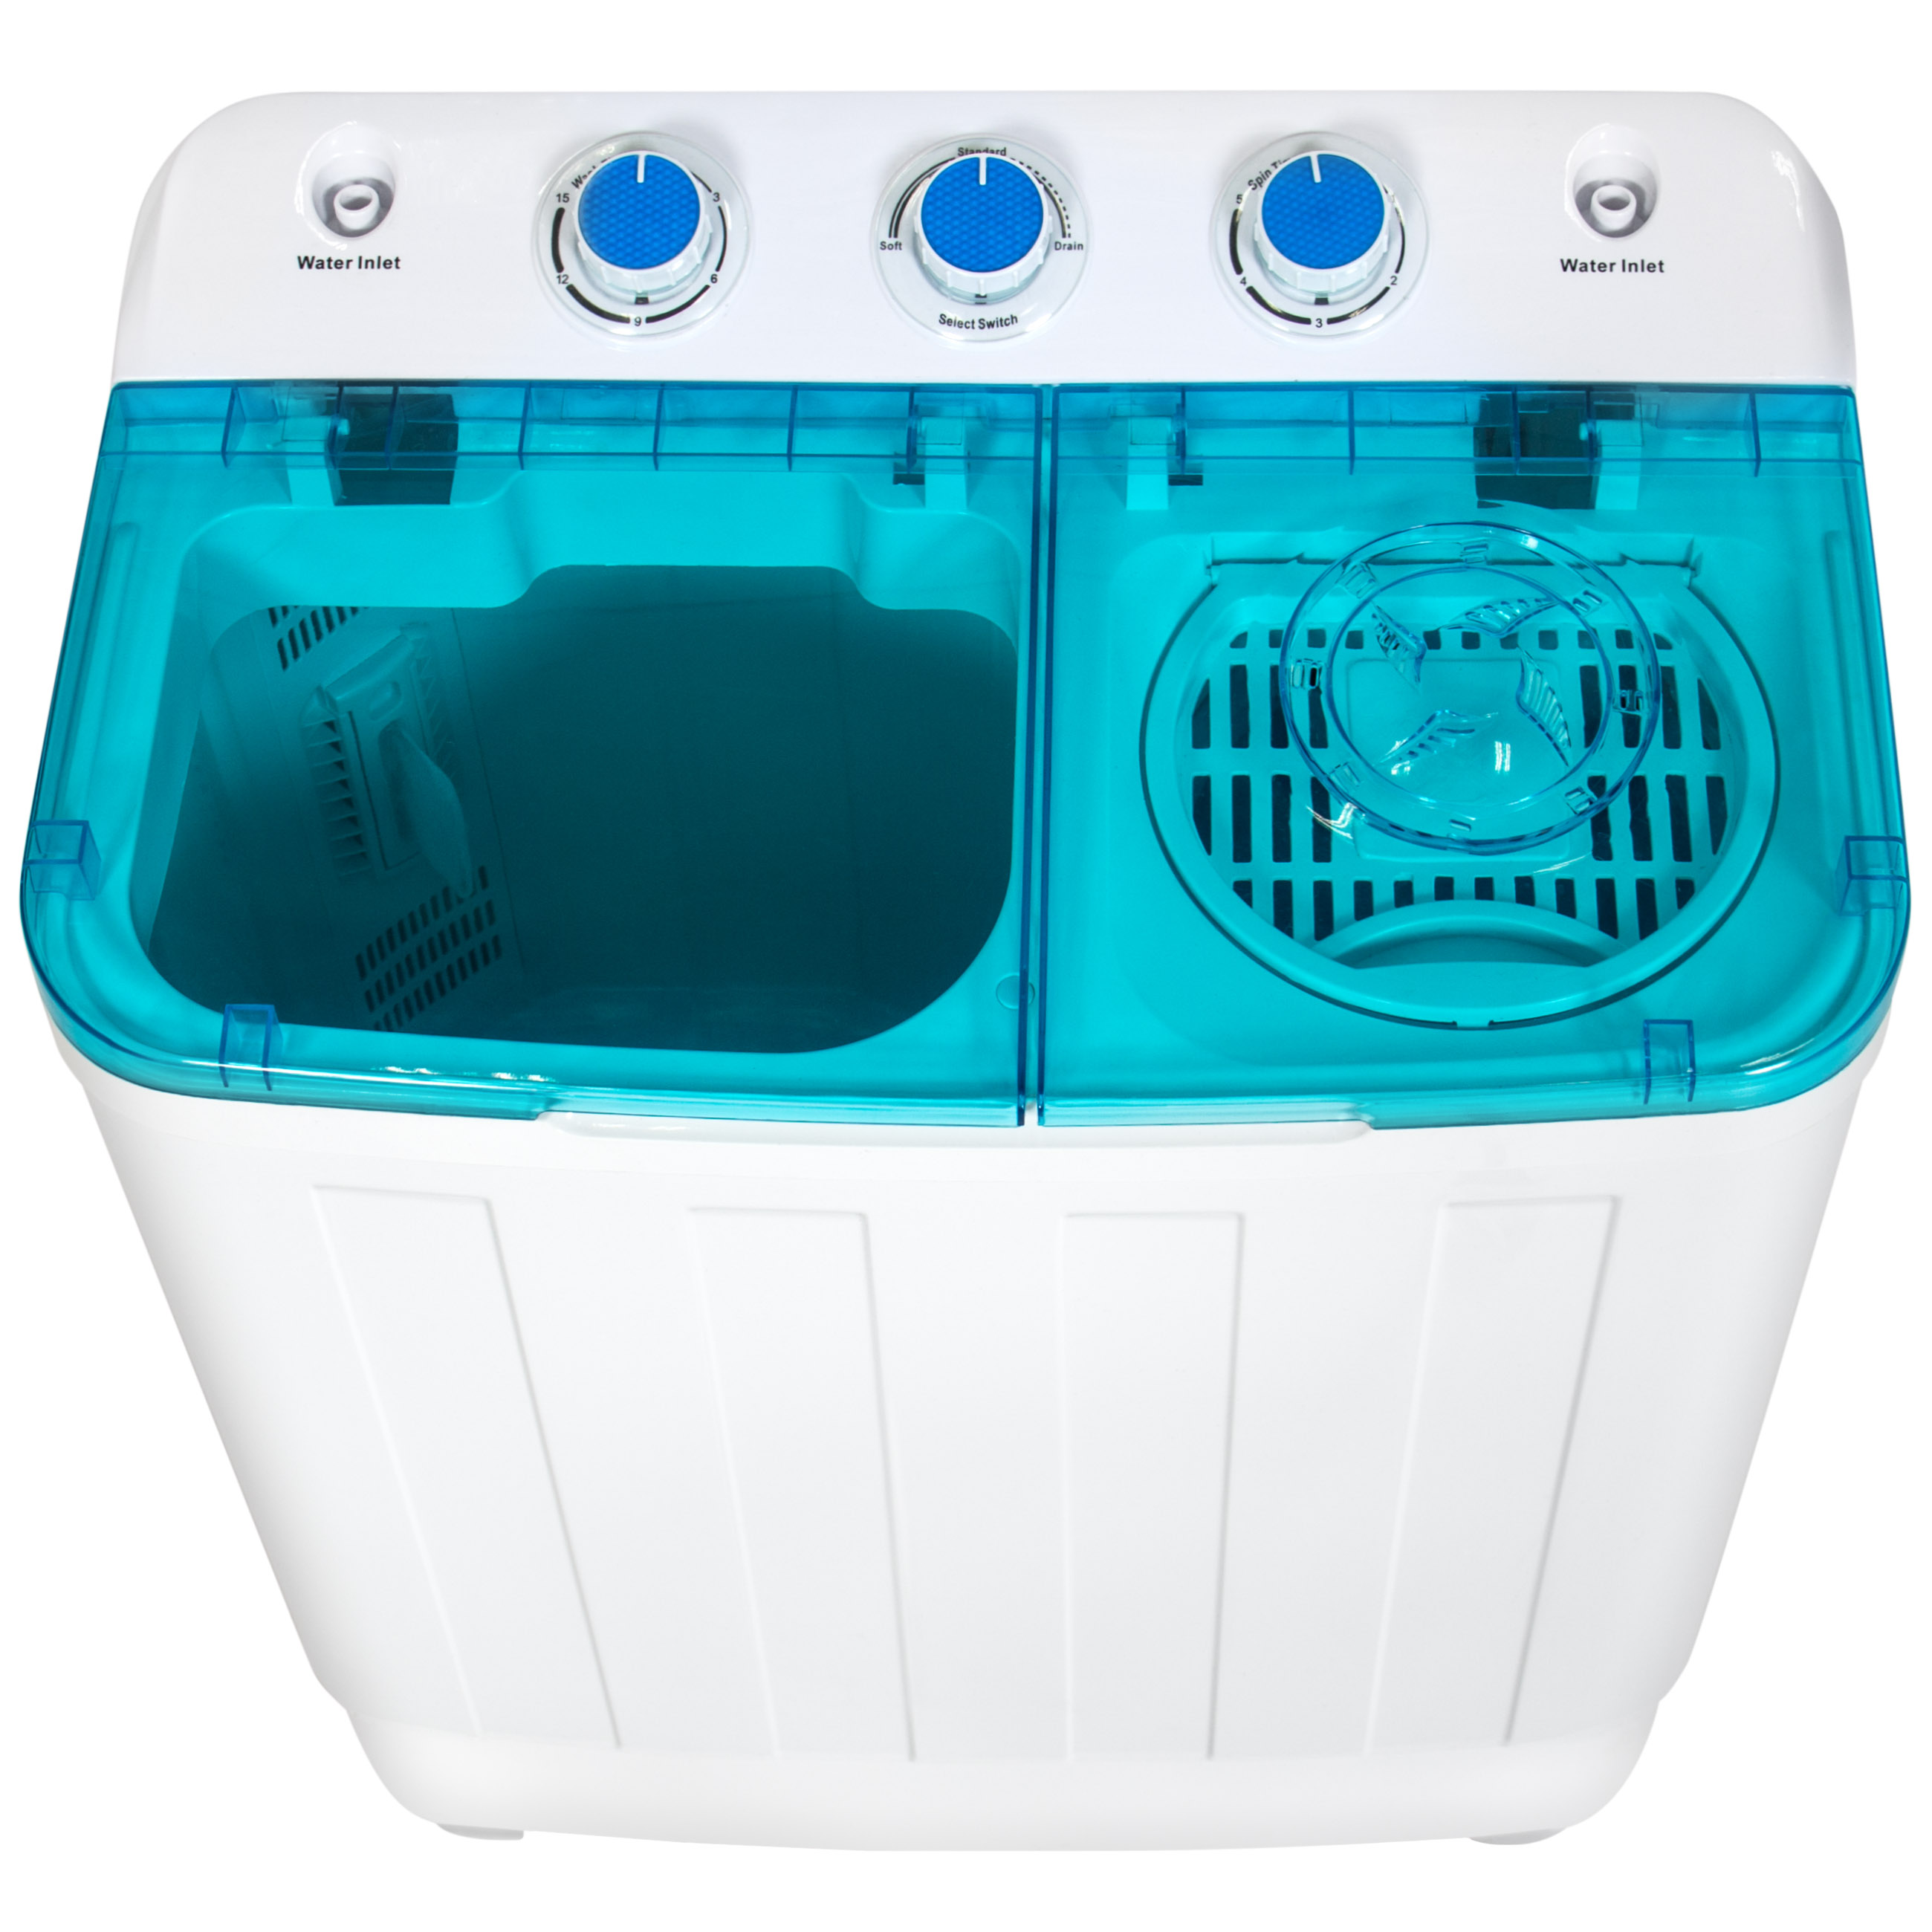 mini washing machine